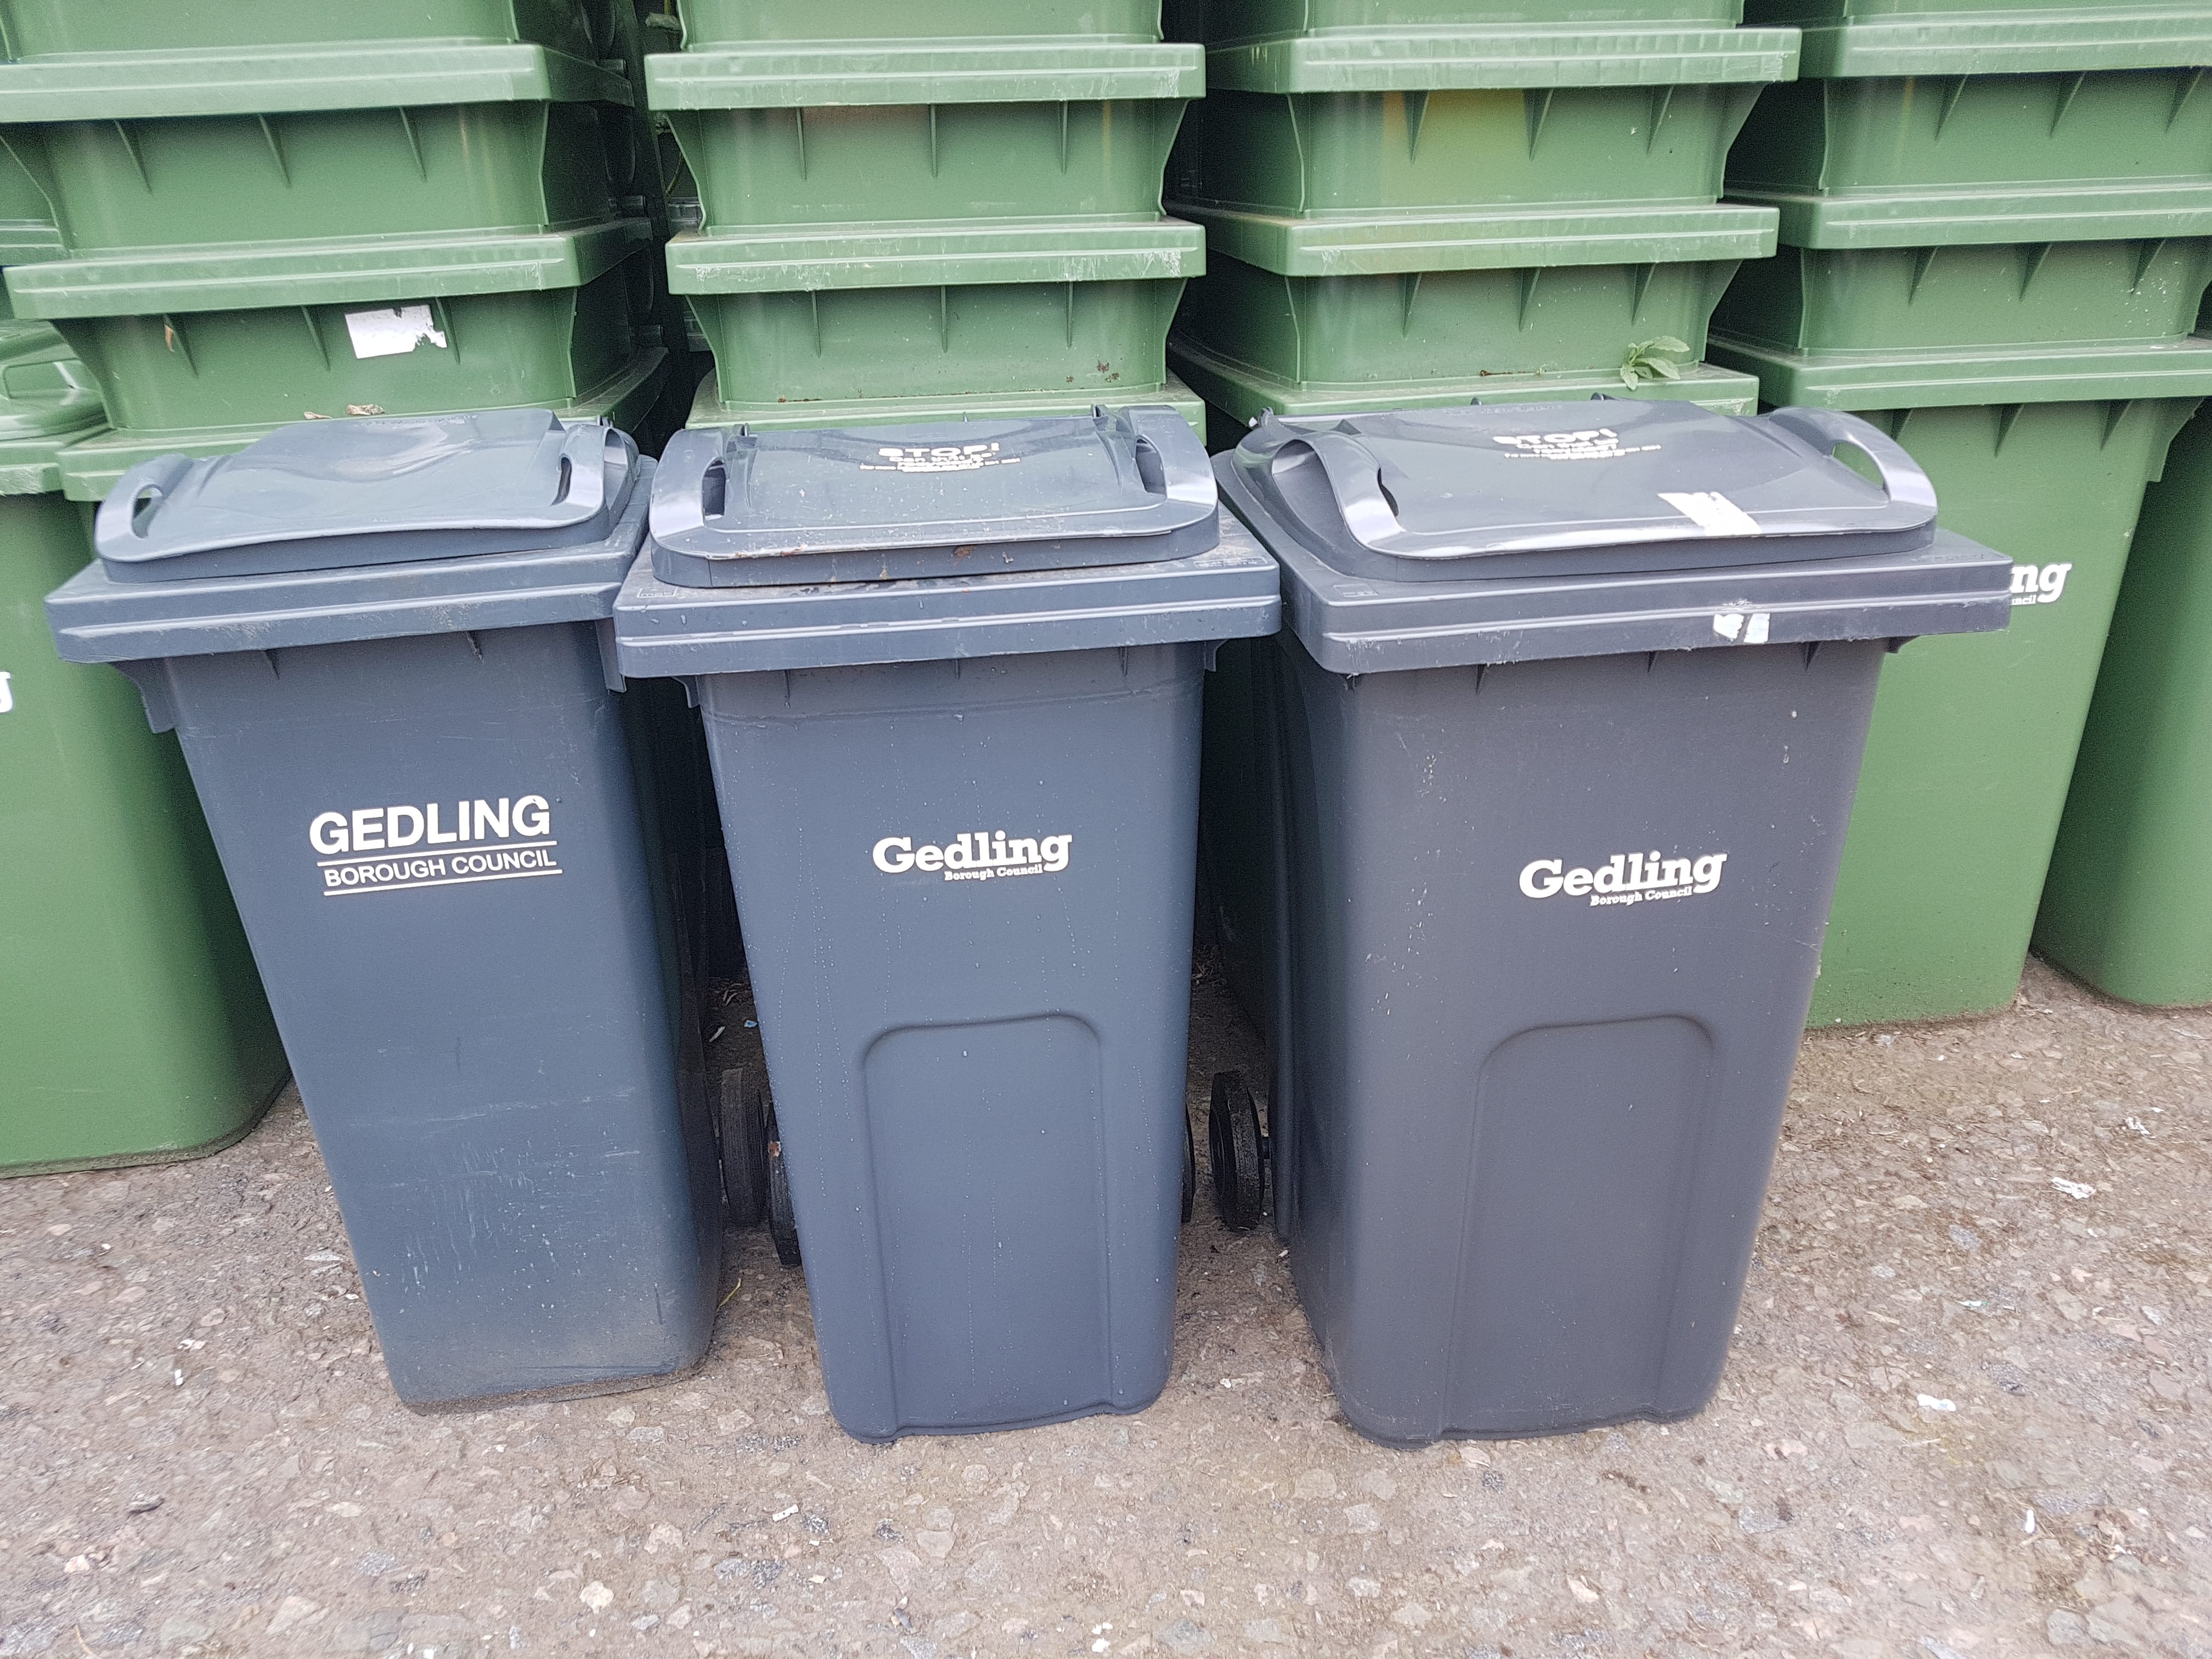 Three bins of different sizes